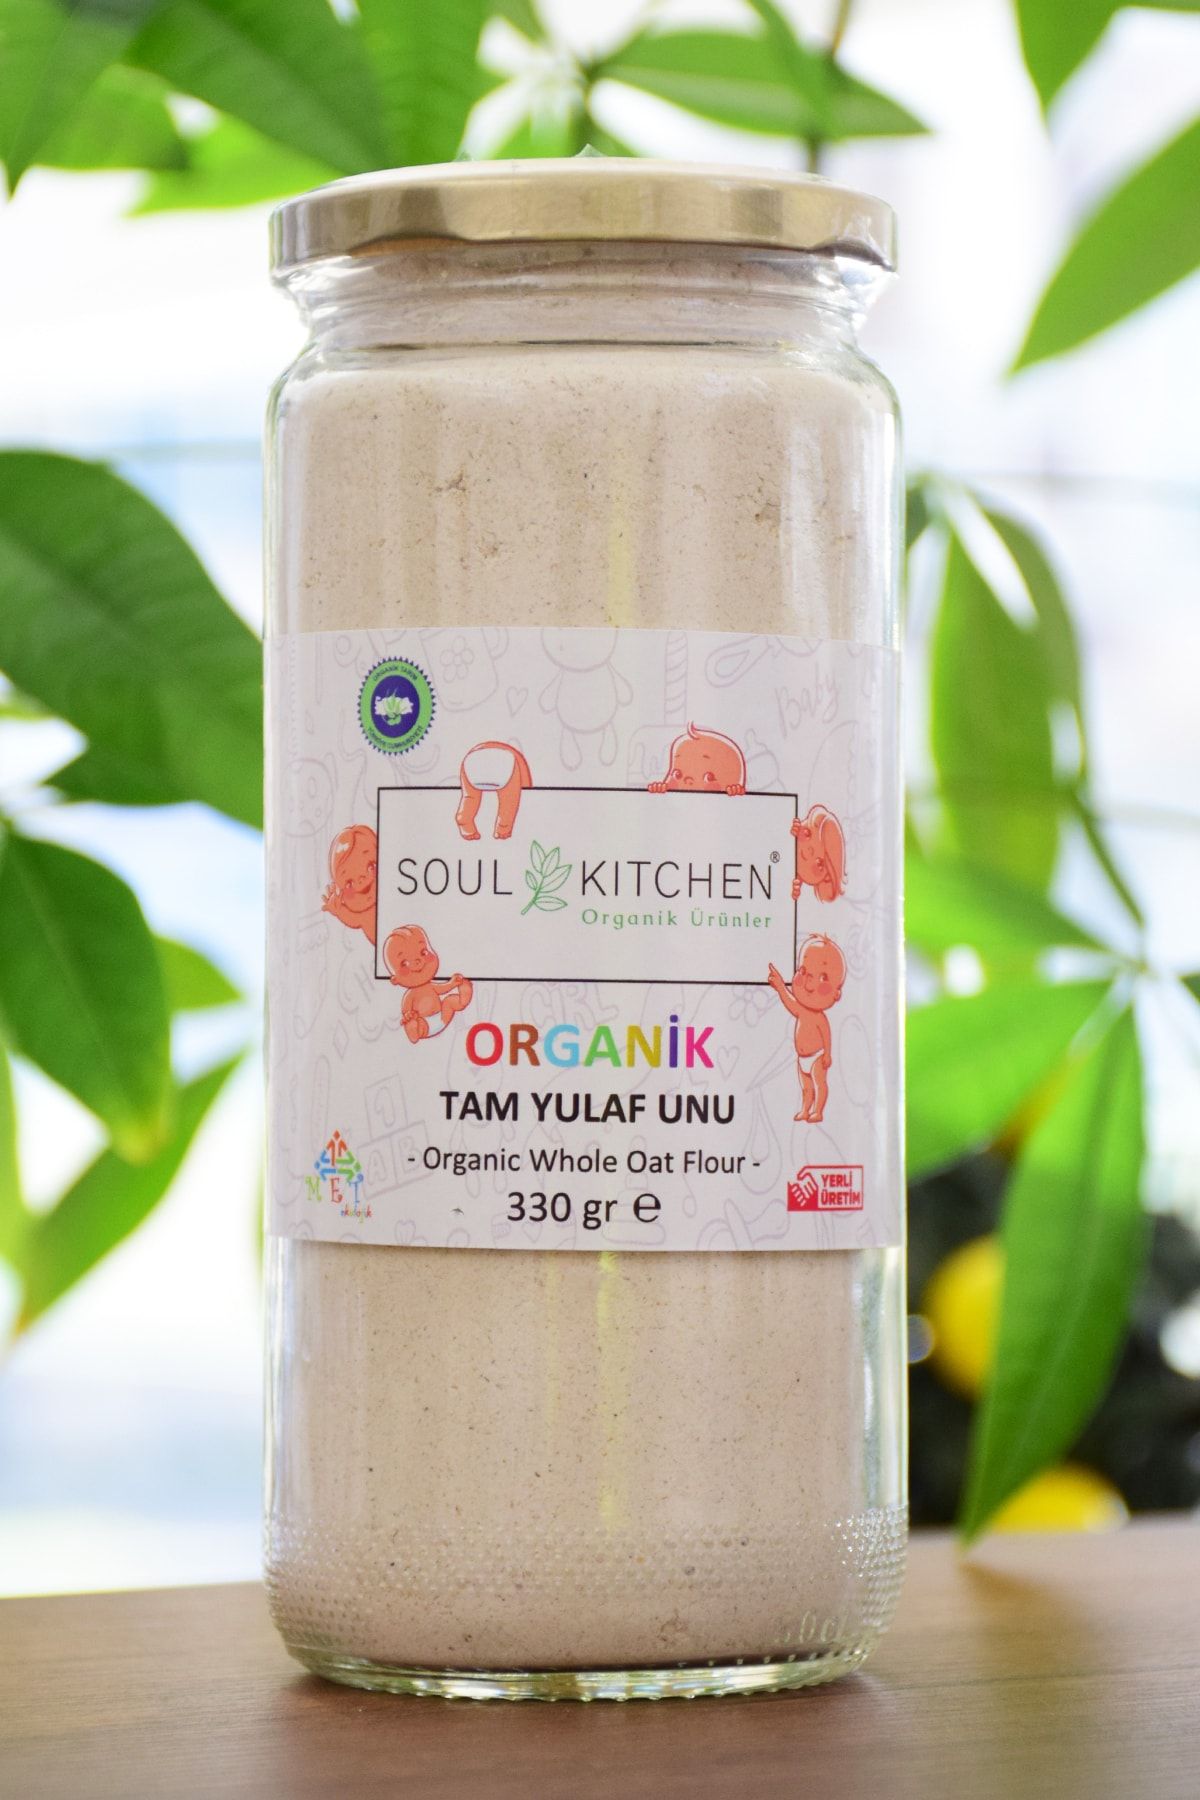 Soul Kitchen Organik Ürünler Sertifikalı Organik Bebek Tam Yulaf Unu +6ay 330gr